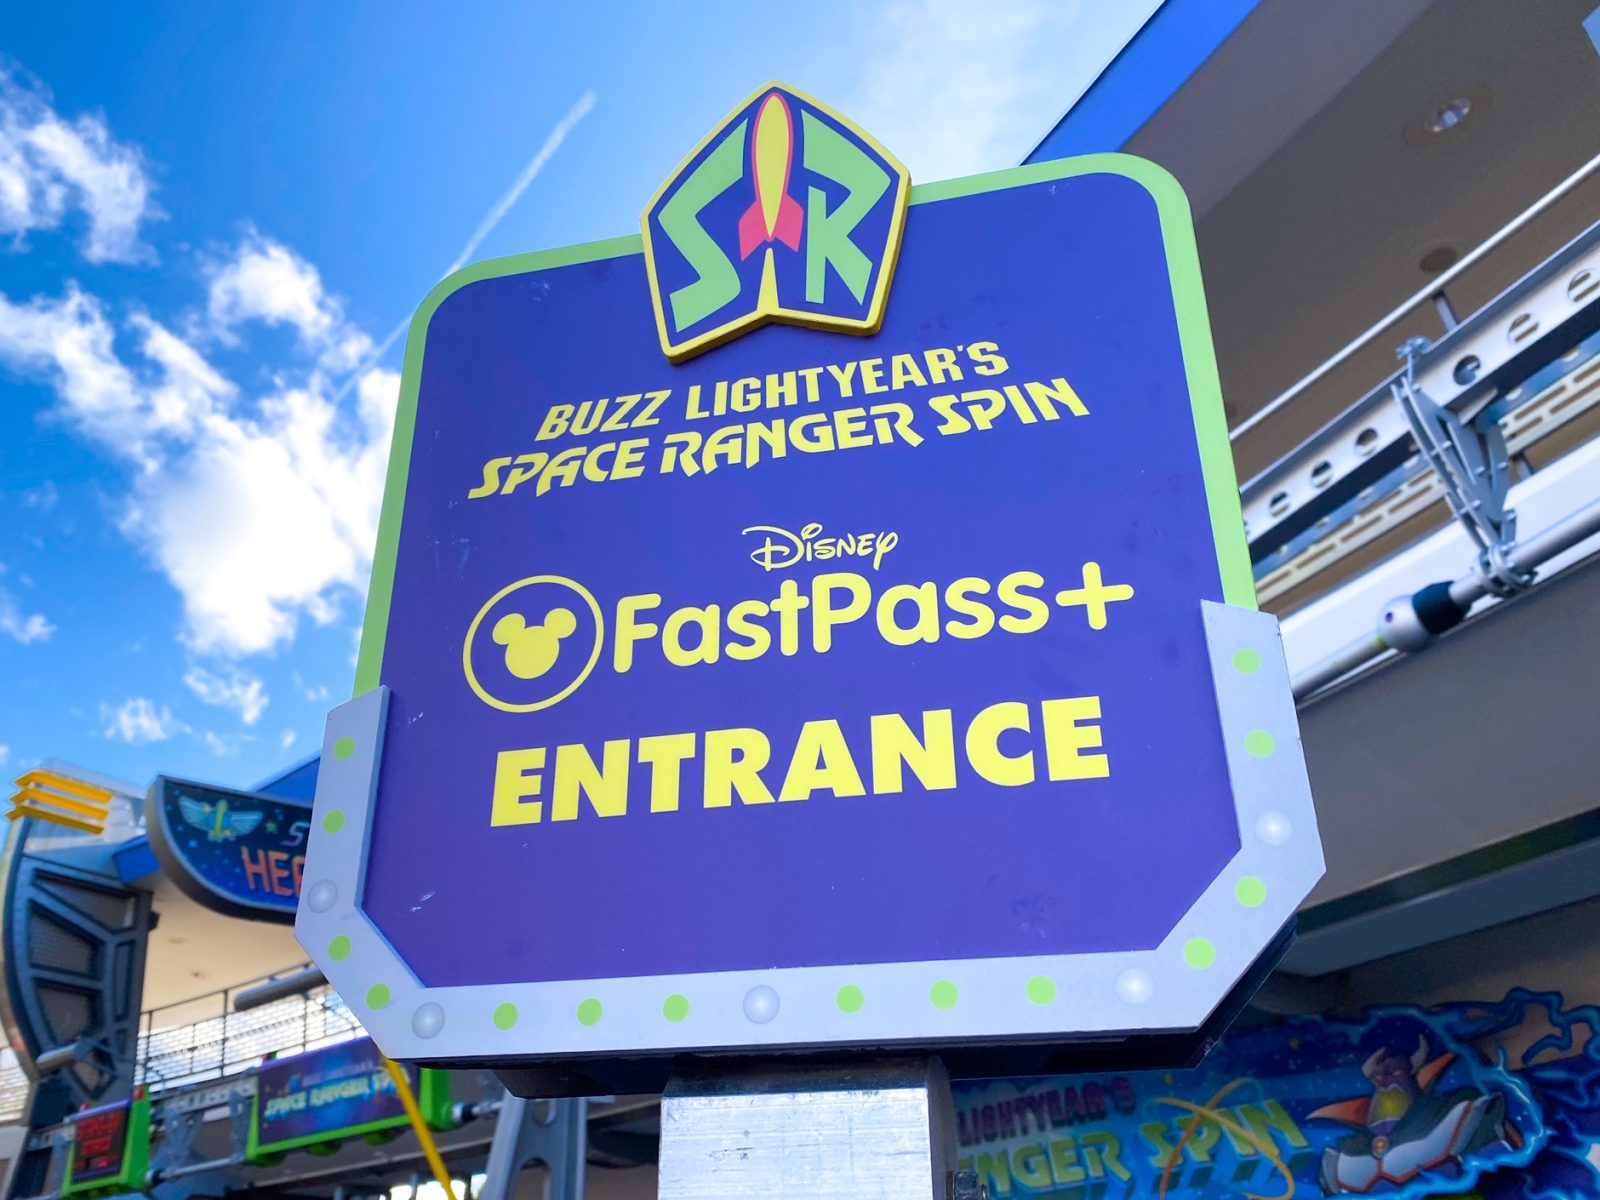 The Disney rider switch Fastpass + entrance buzz lightyear ride